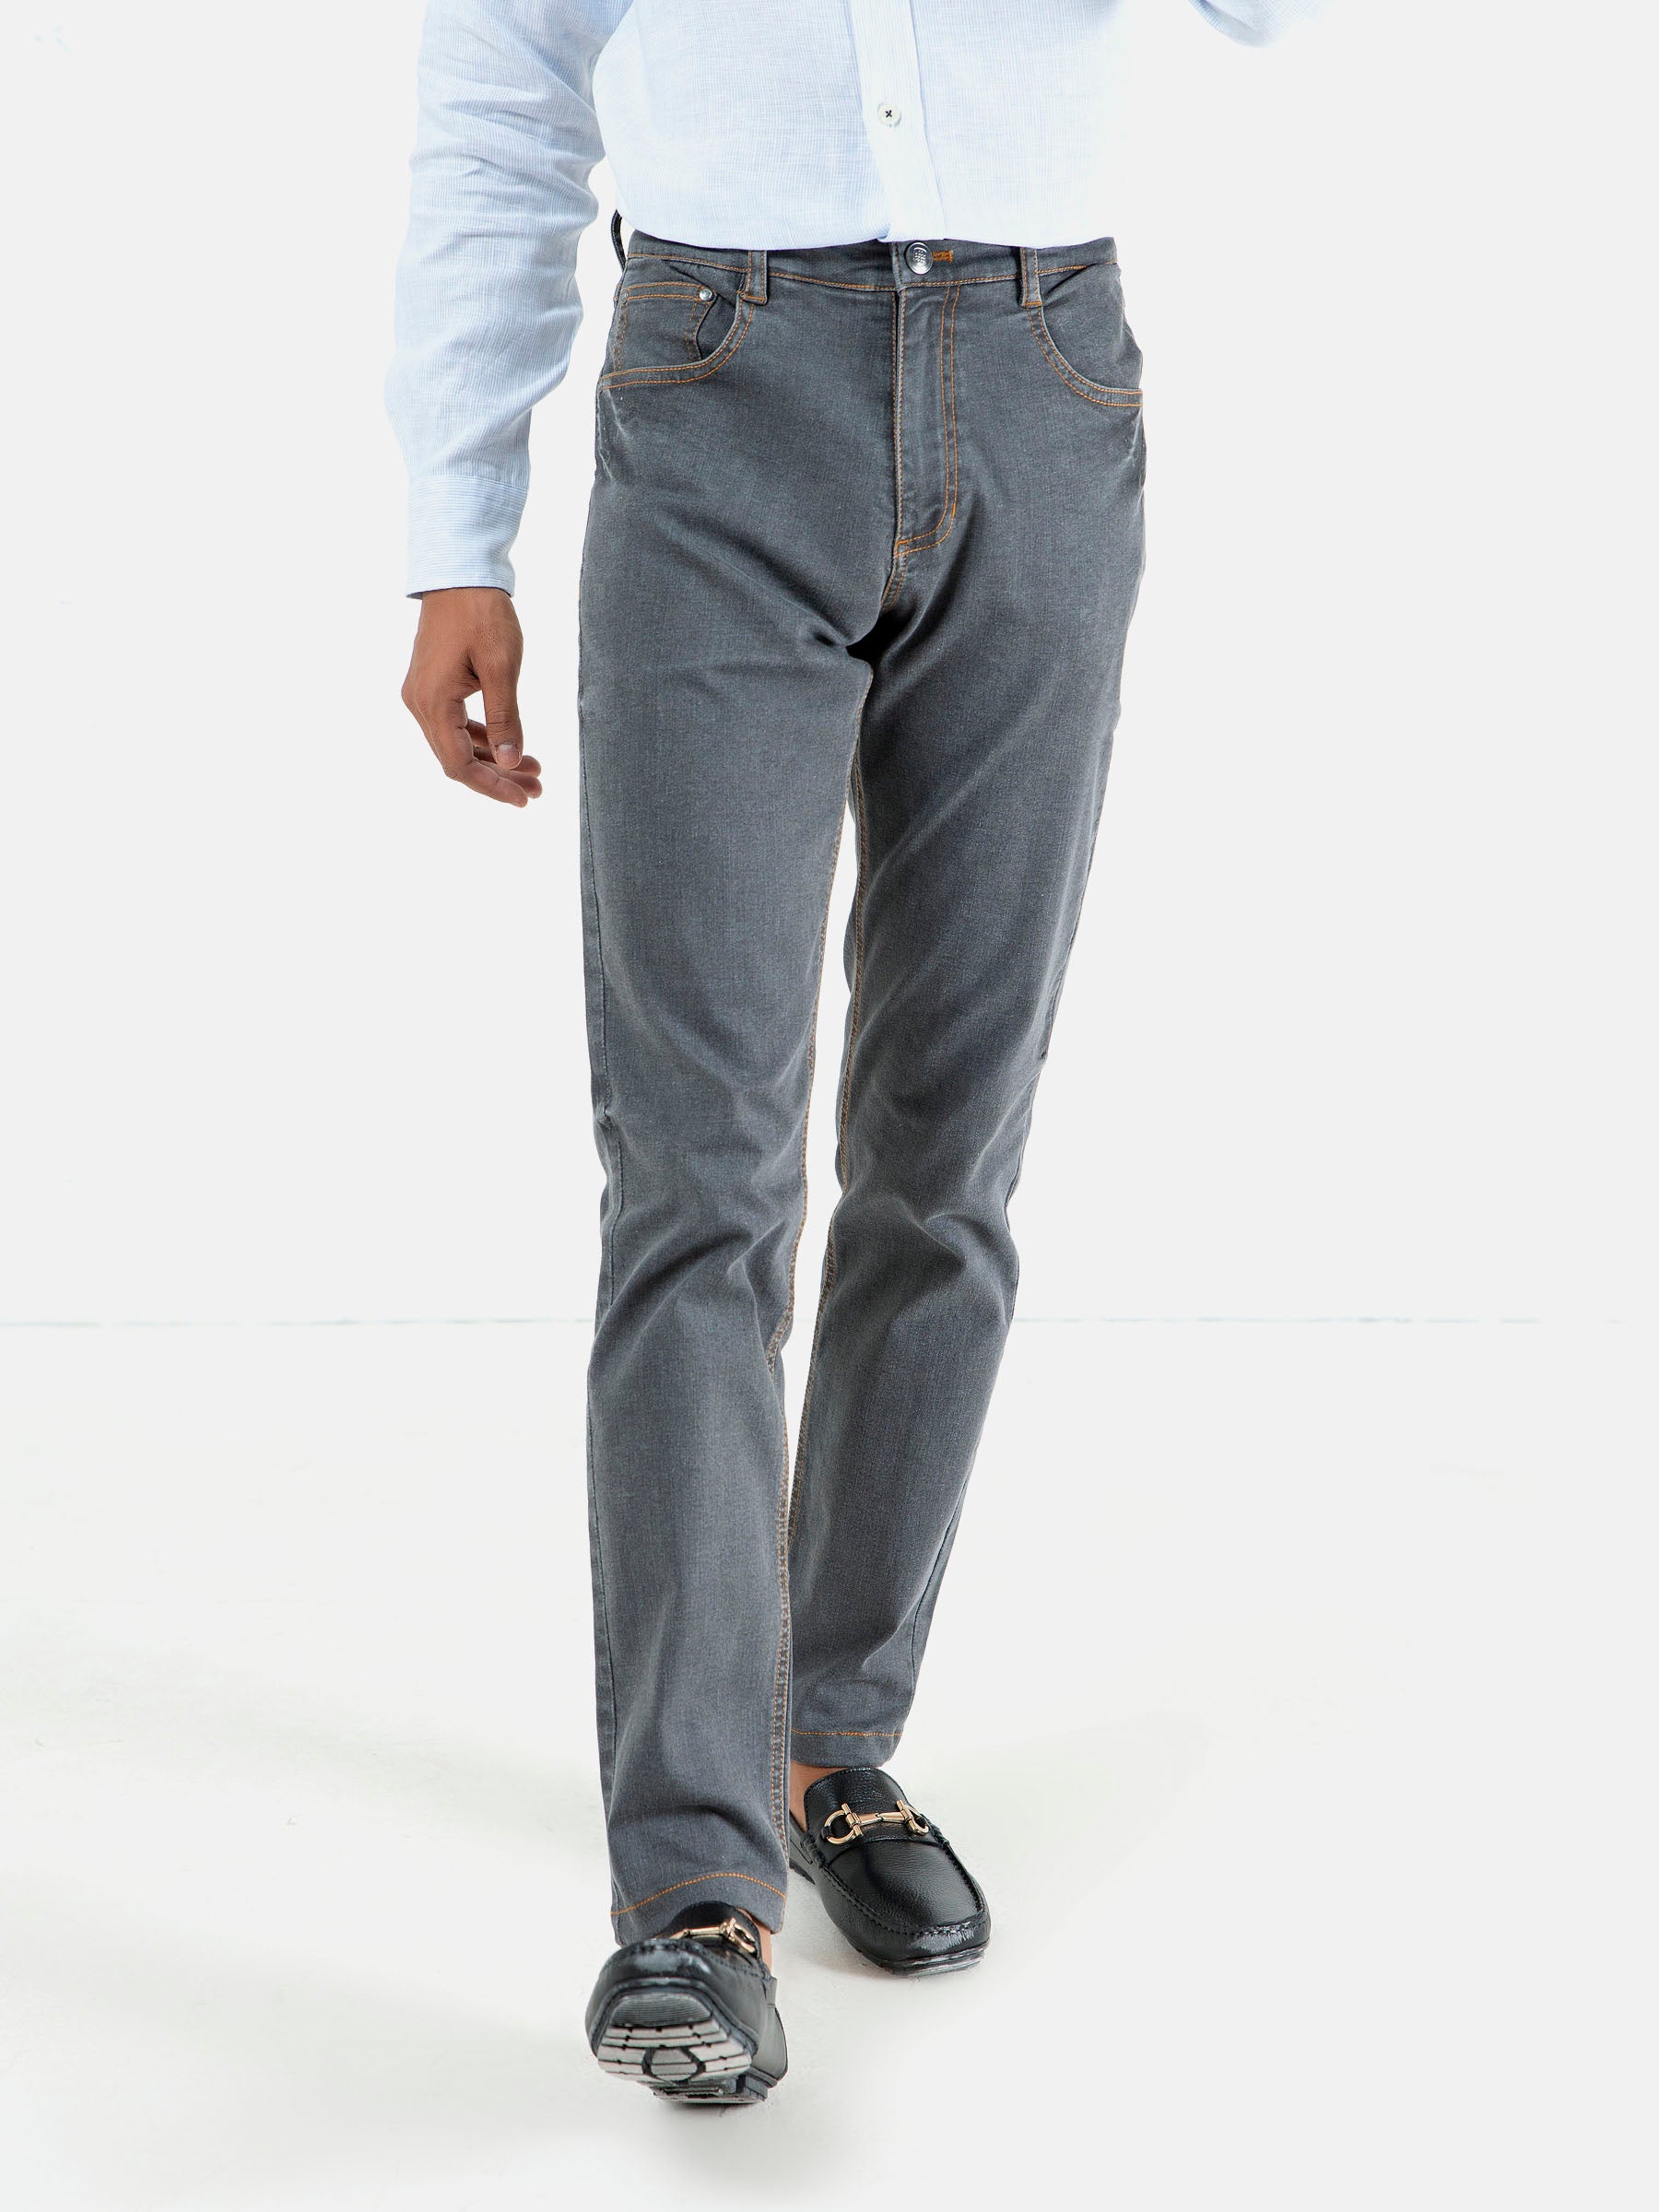 Denim Trousers - Jeans & Denim Pants for Men | SUITSUPPLY France